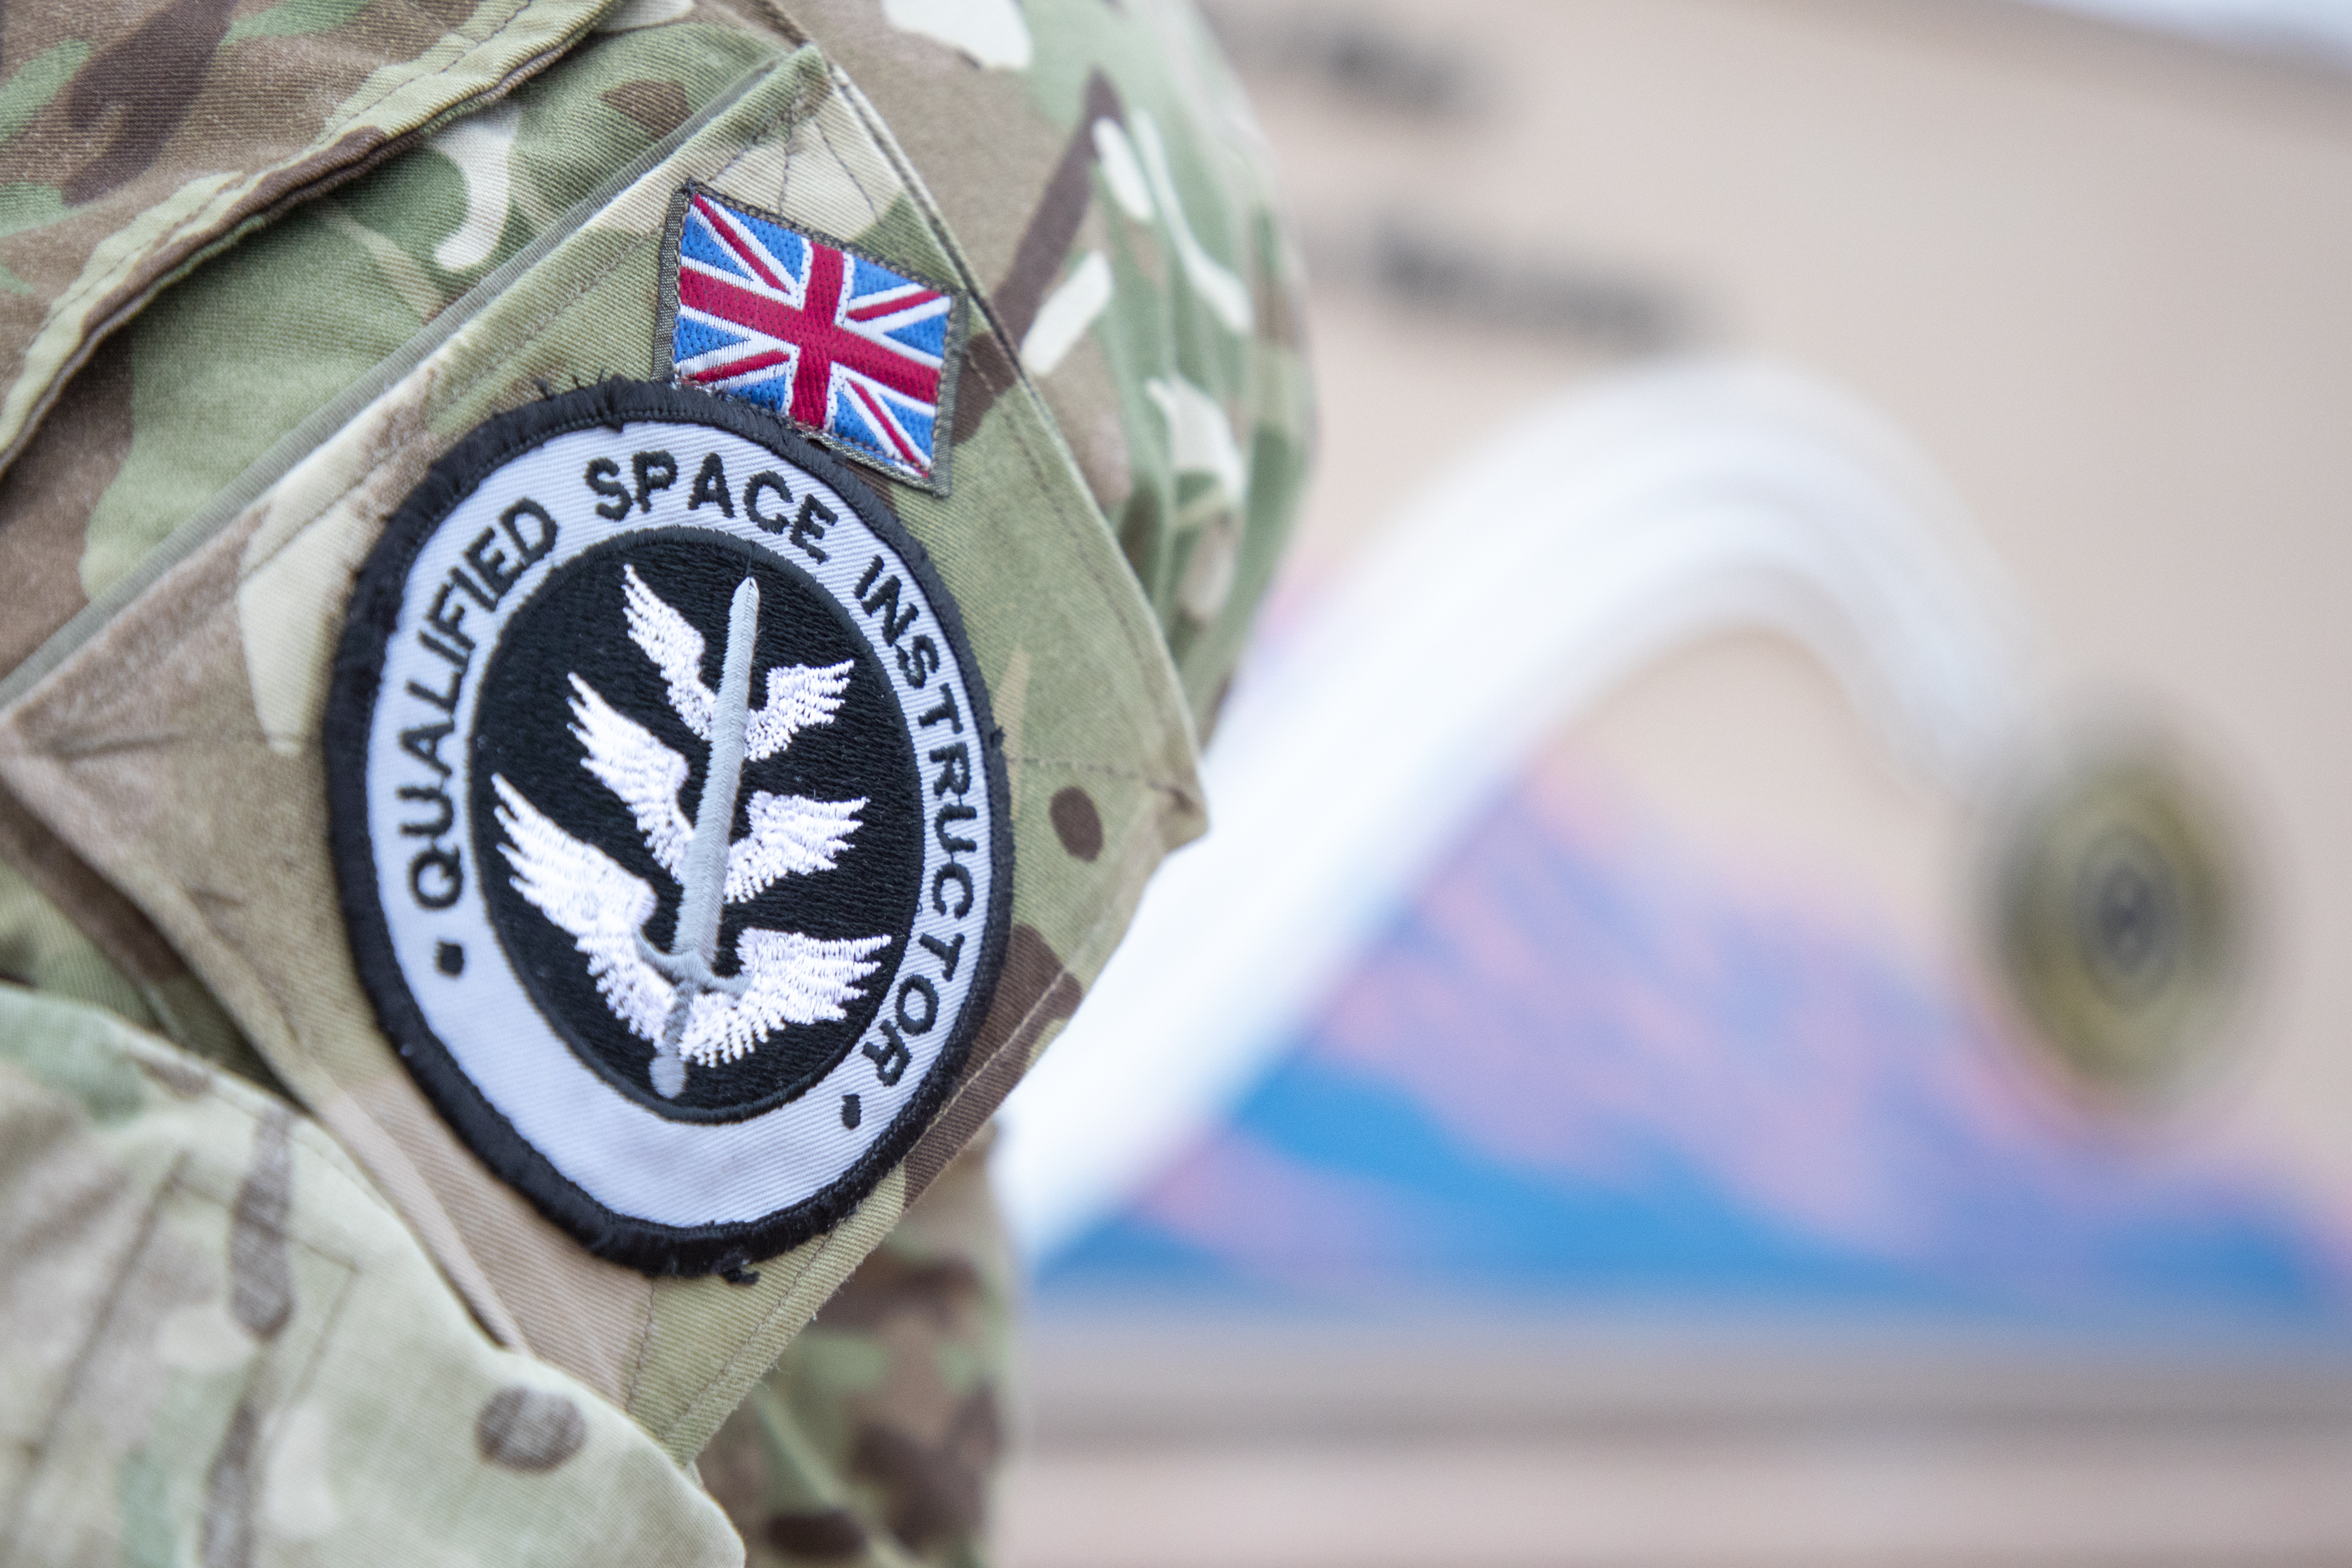 UK Space Command badge on uniform.